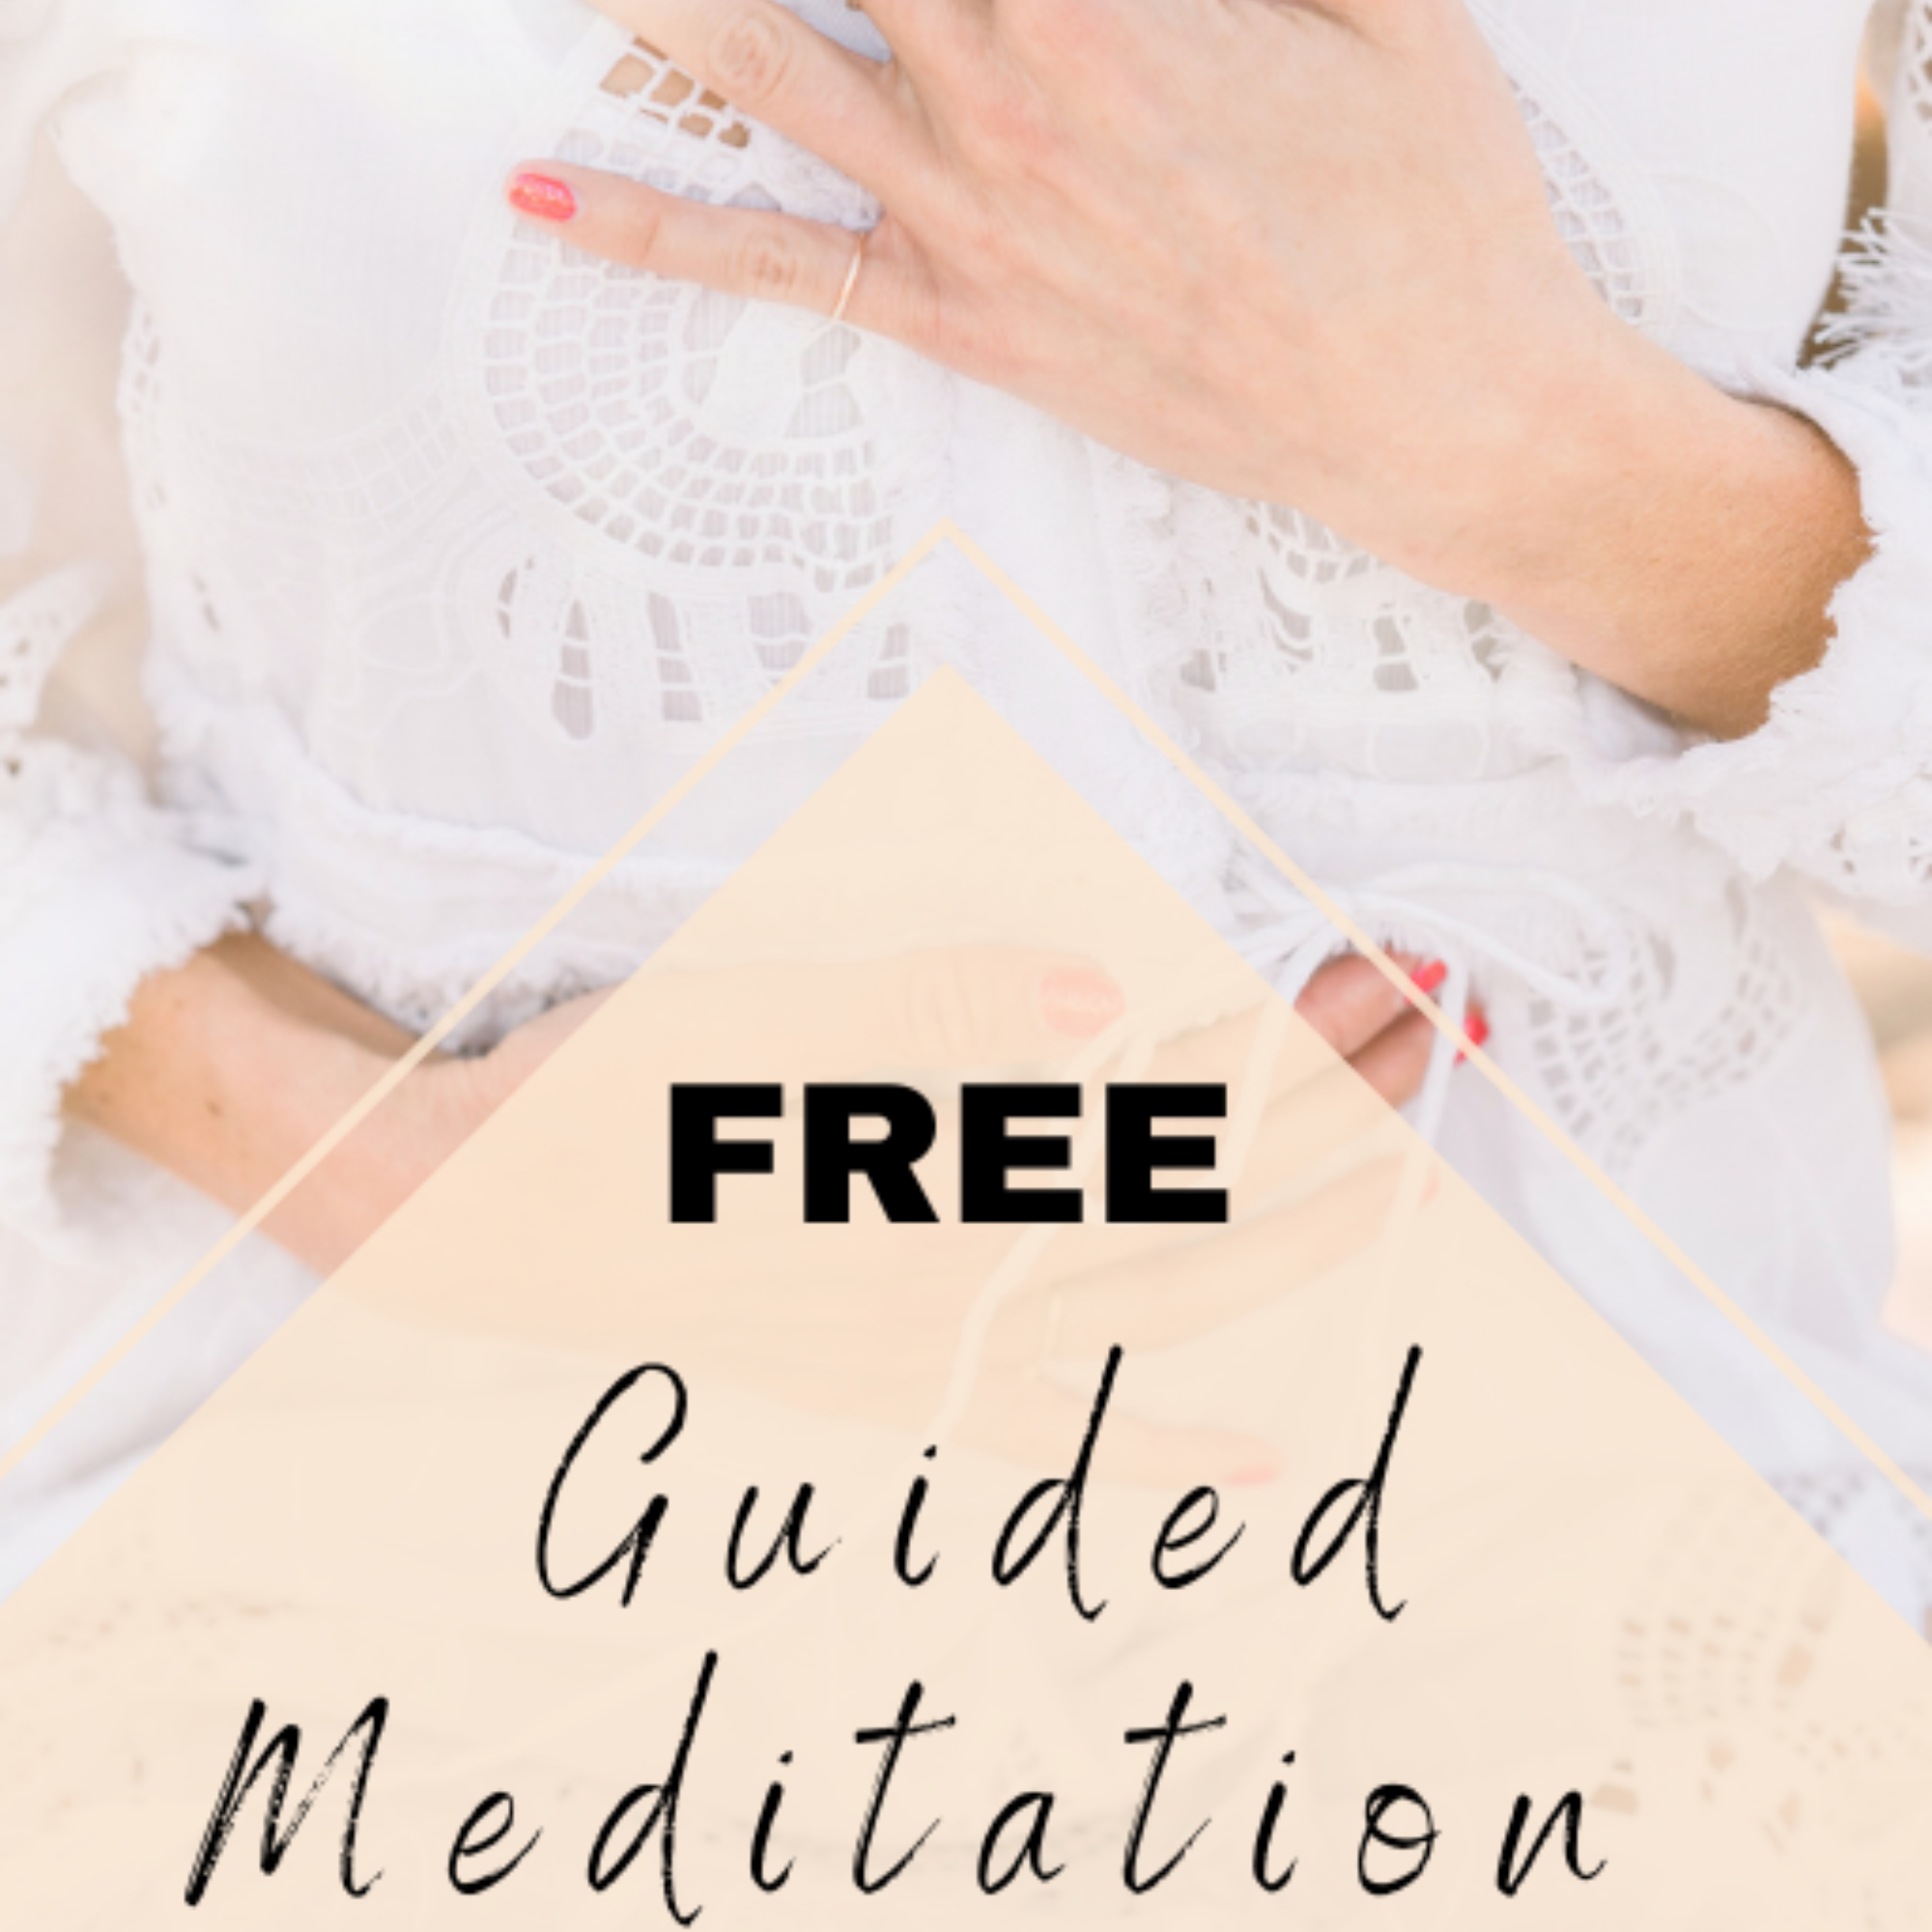 FREE Guided Meditation